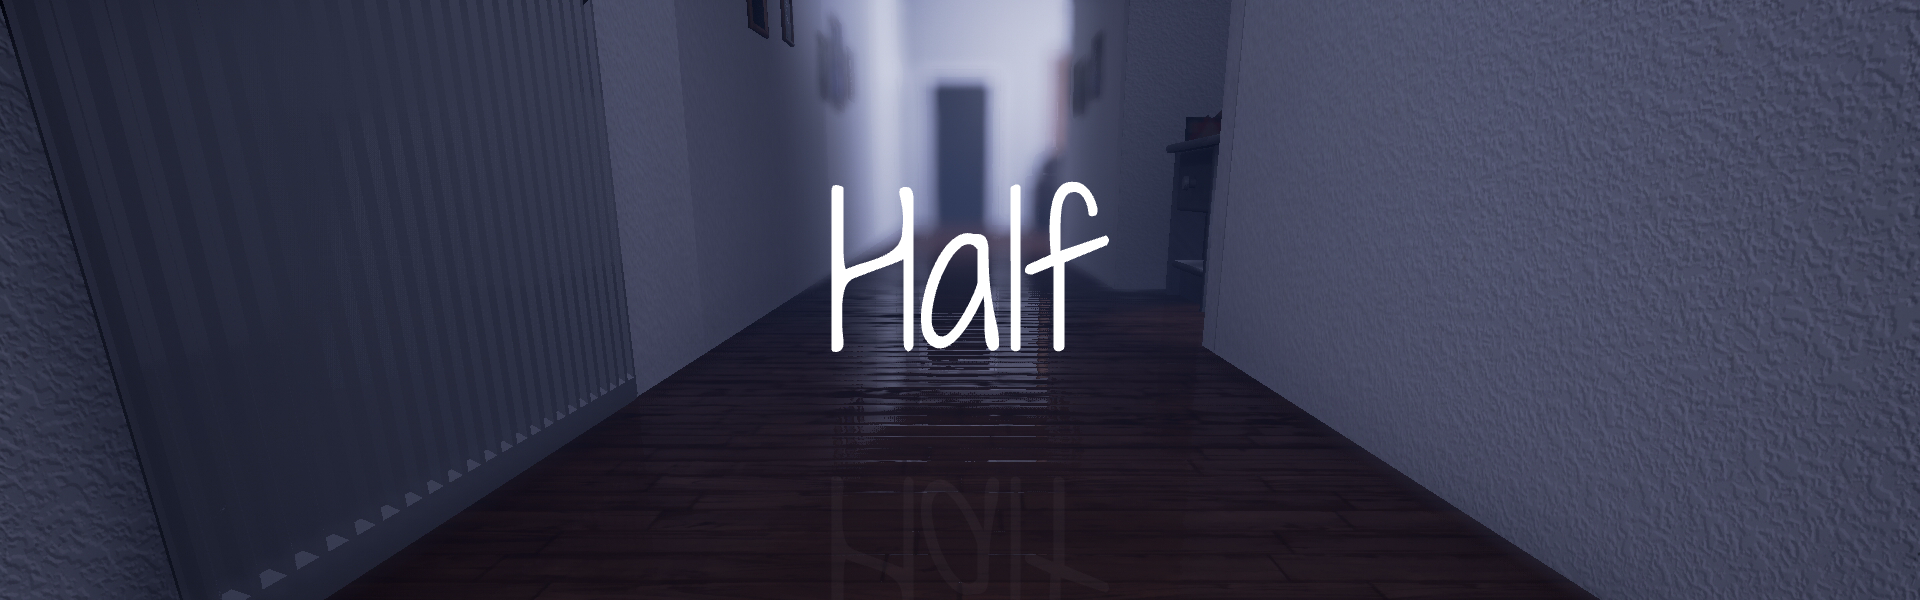 Half - Horrorgame